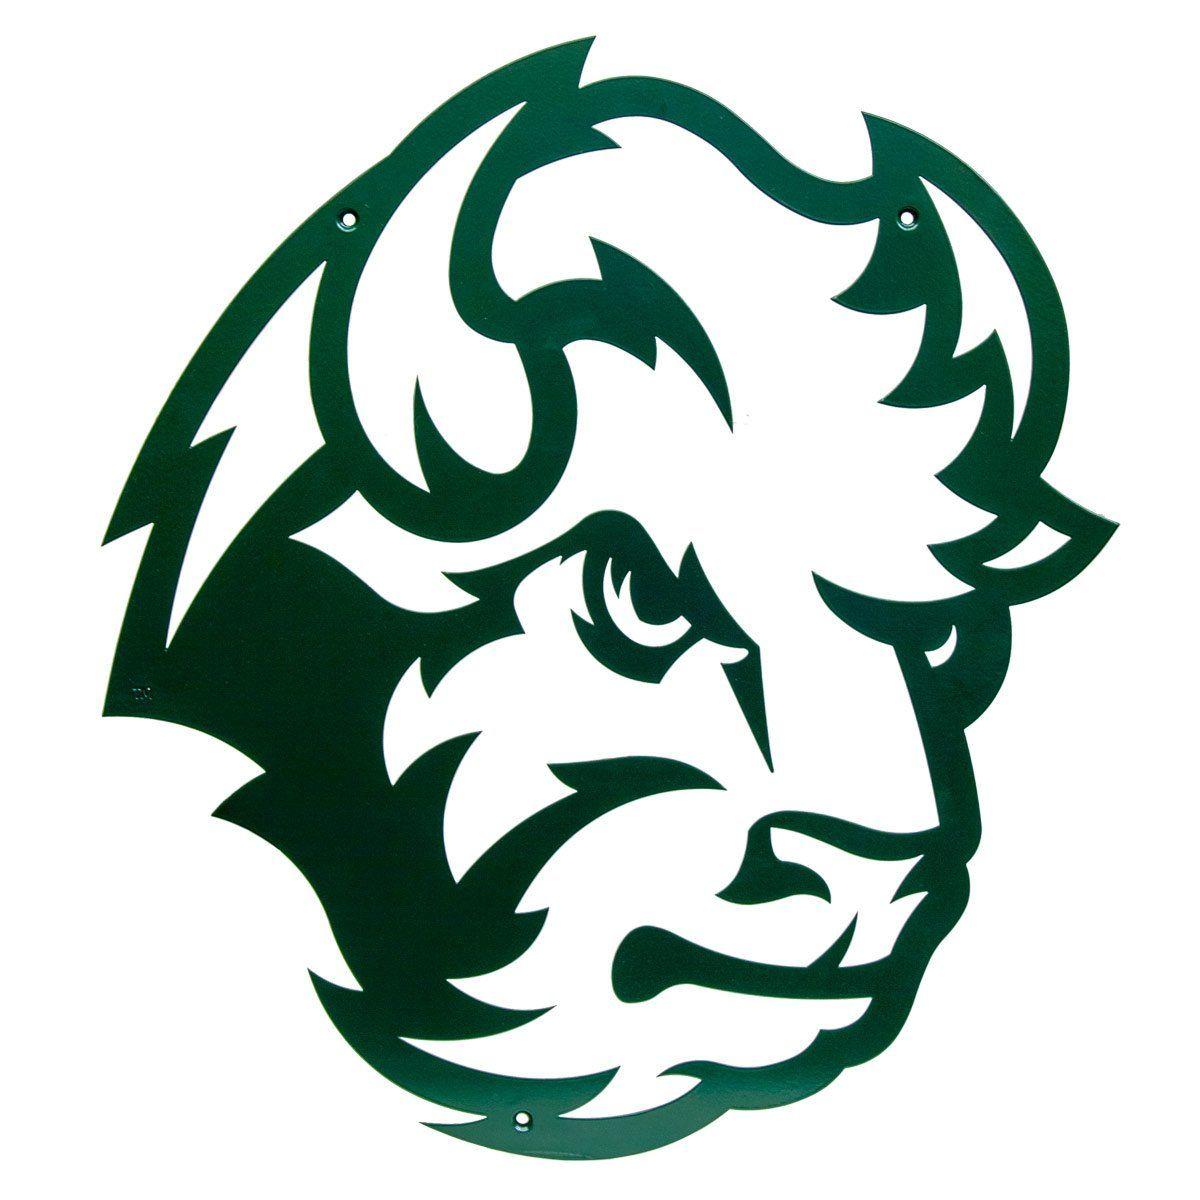 Bison Head Logo - Amazon.com: North Dakota State University NDSU Bison Head Logo ...